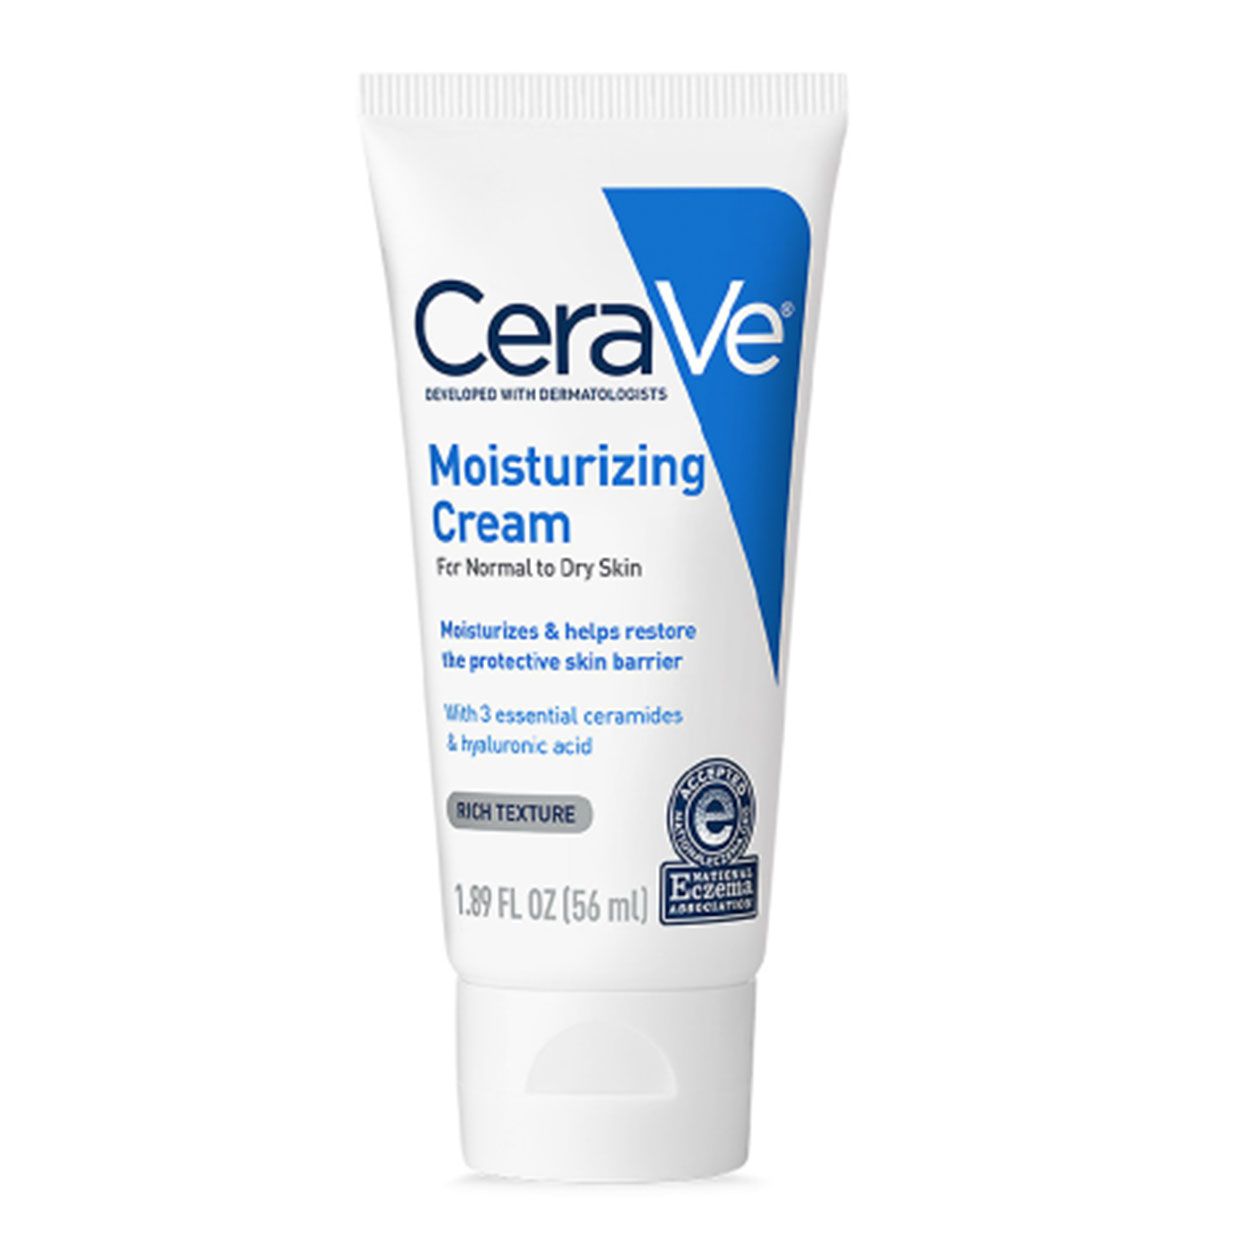 best drugstore skincare products cerave moisturizing cream